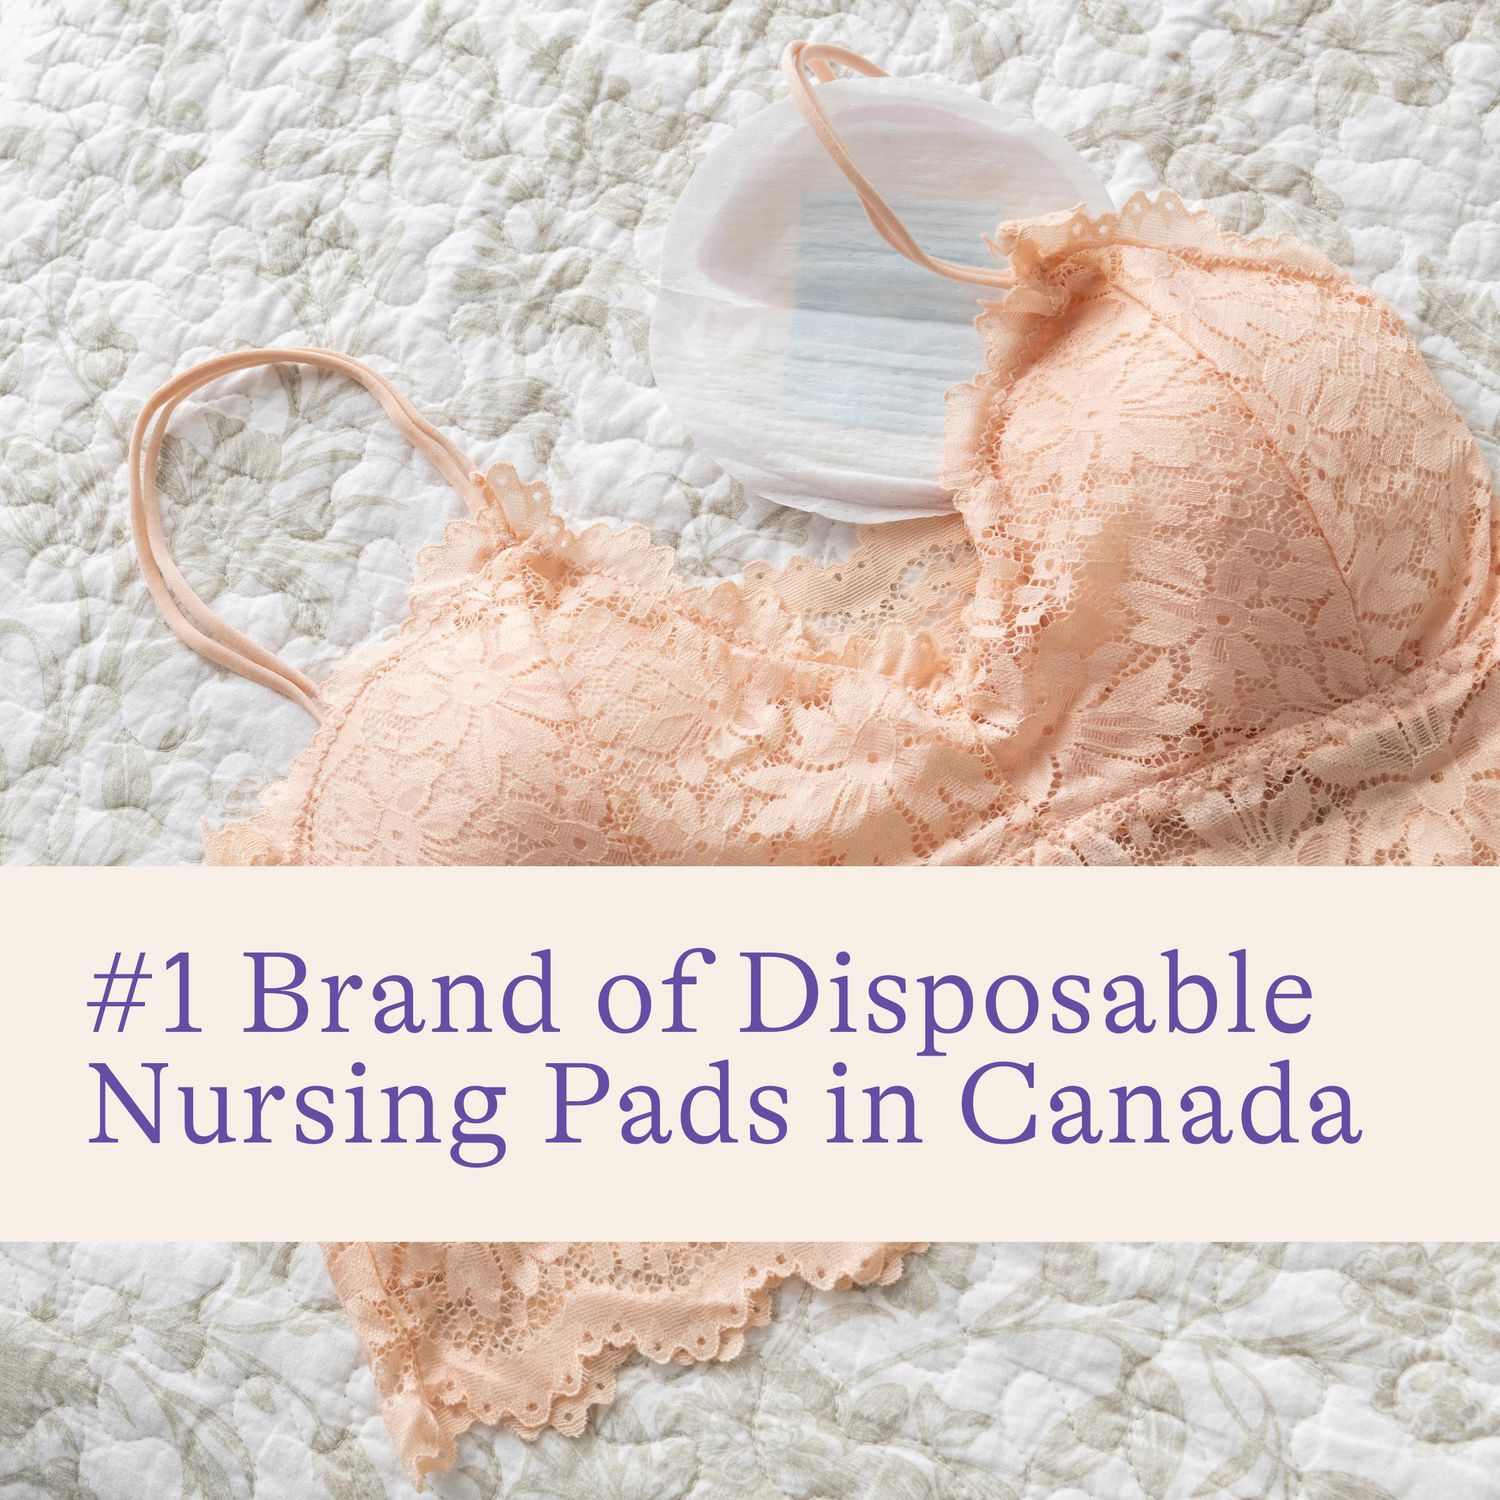 Lansinoh Stay Dry Nursing Pads (26 Individually Wrapped Pads